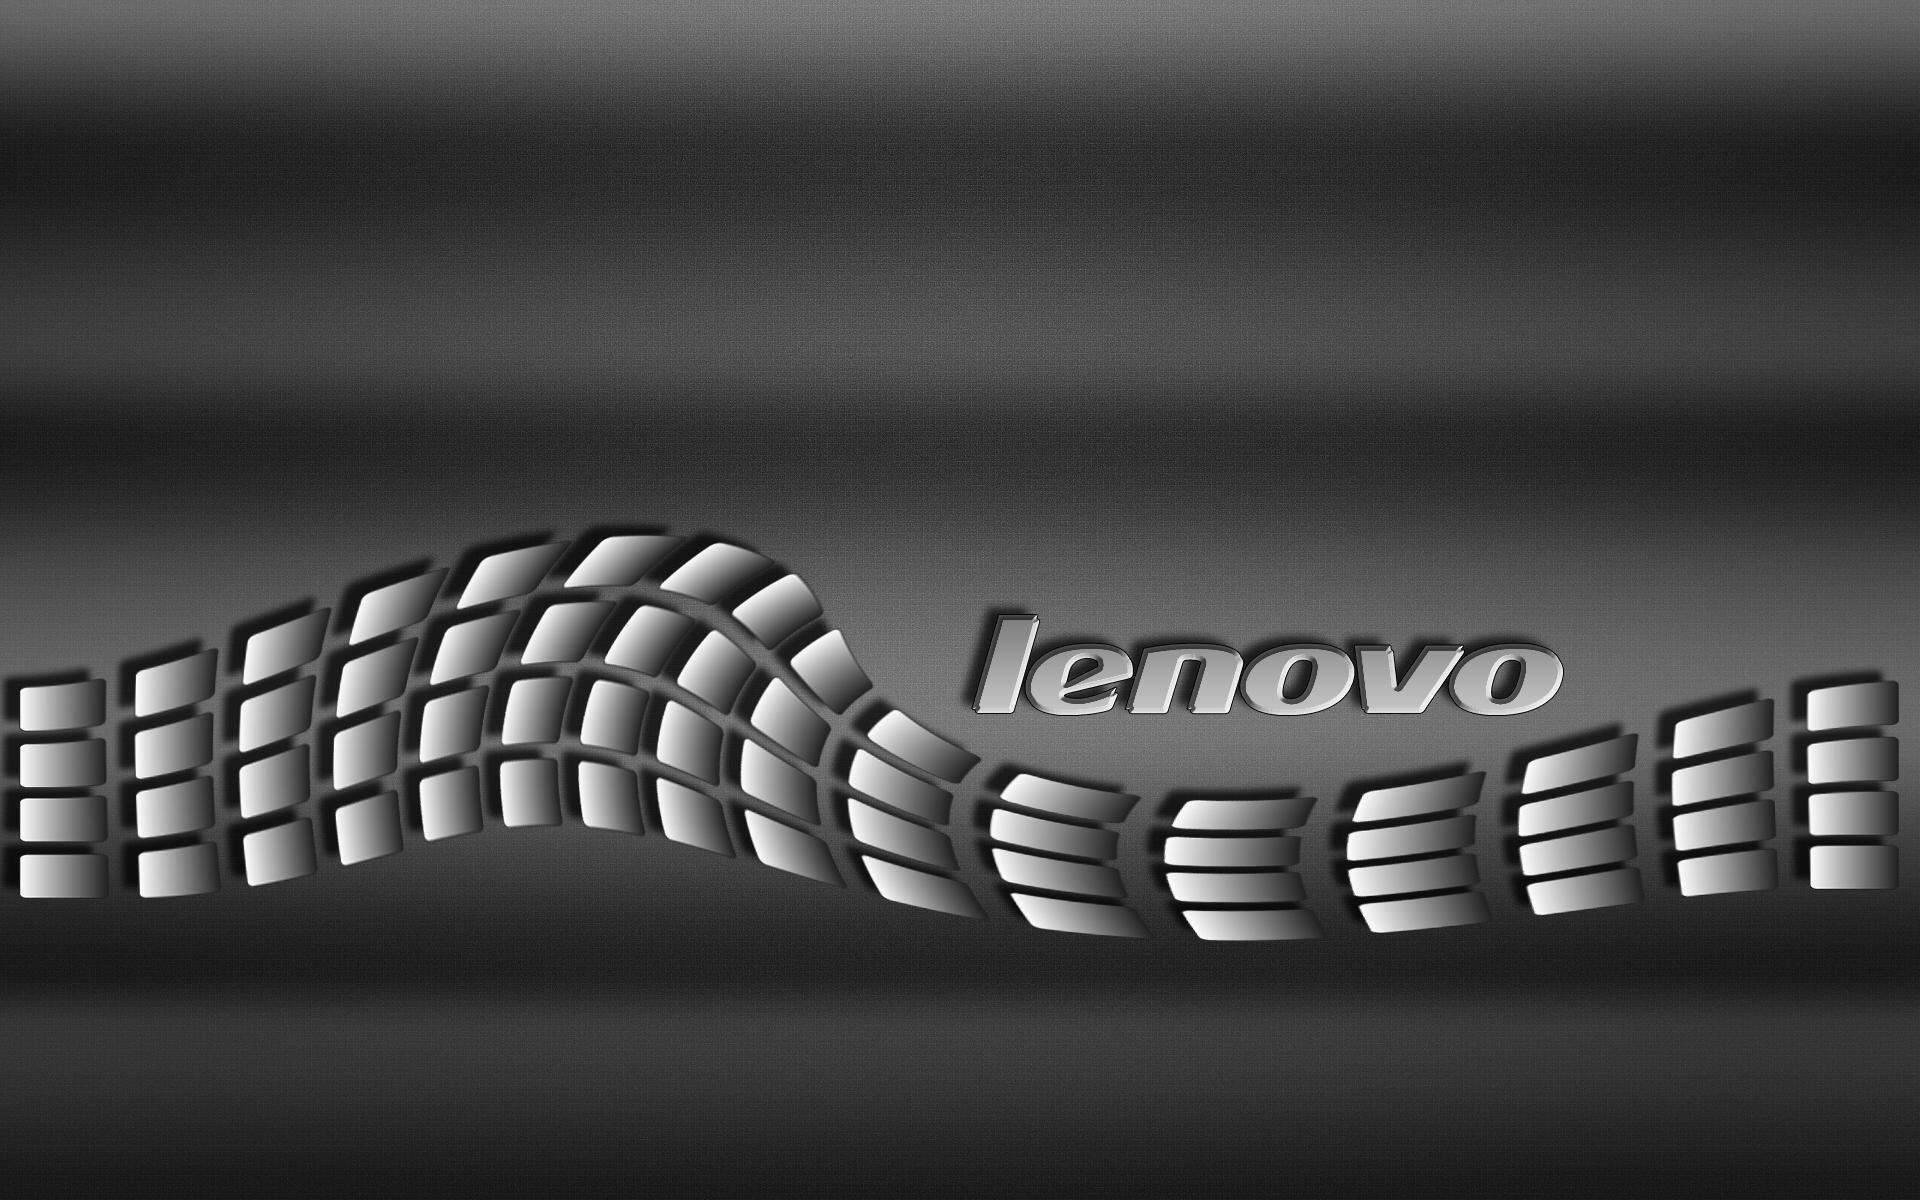 Free Lenovo Official Wallpaper Downloads, [100+] Lenovo Official Wallpapers  for FREE 